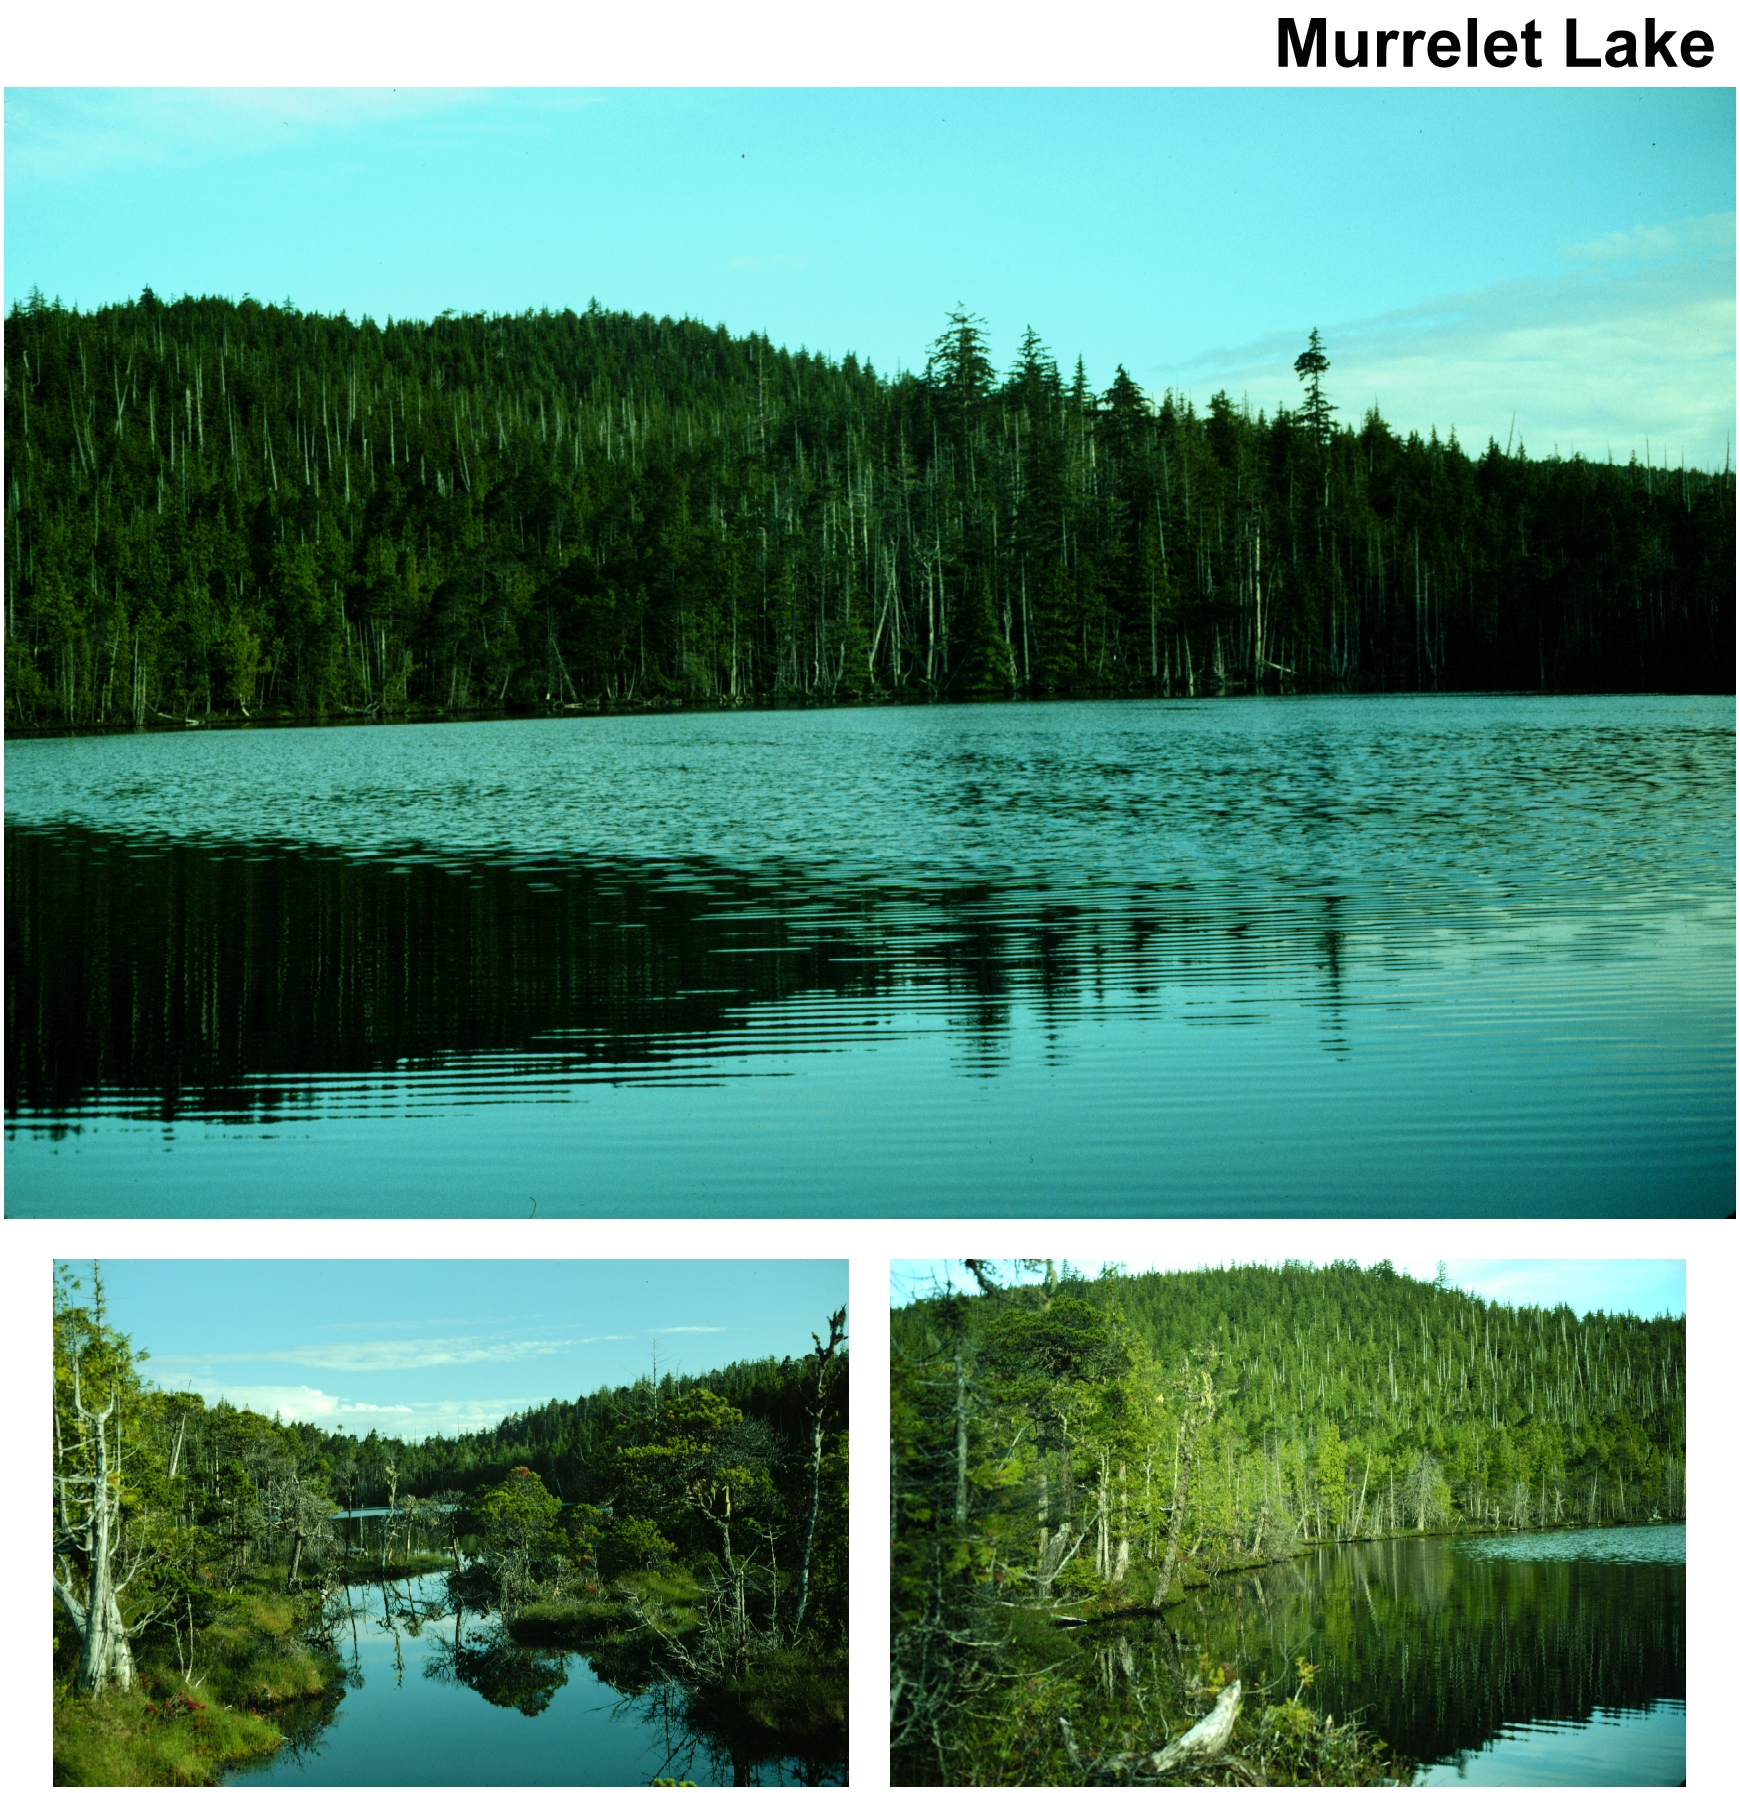 MURRELET LAKE